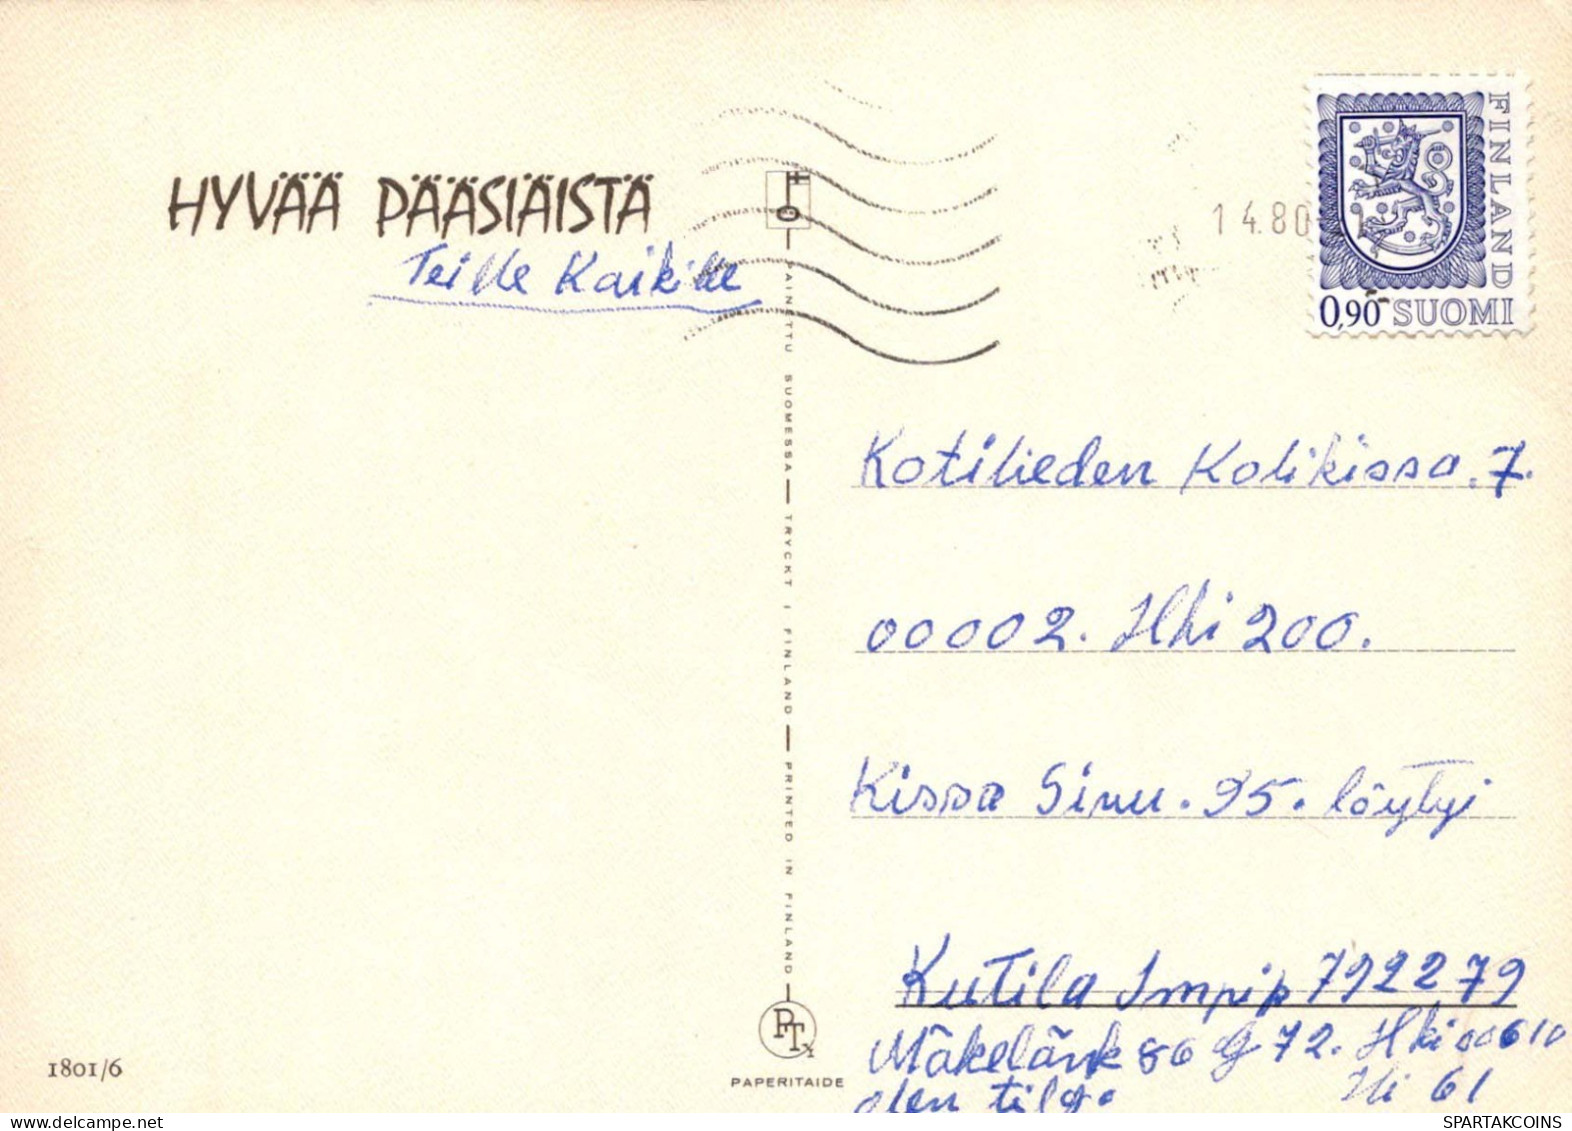 PASQUA UOVO Vintage Cartolina CPSM #PBO176.IT - Pâques